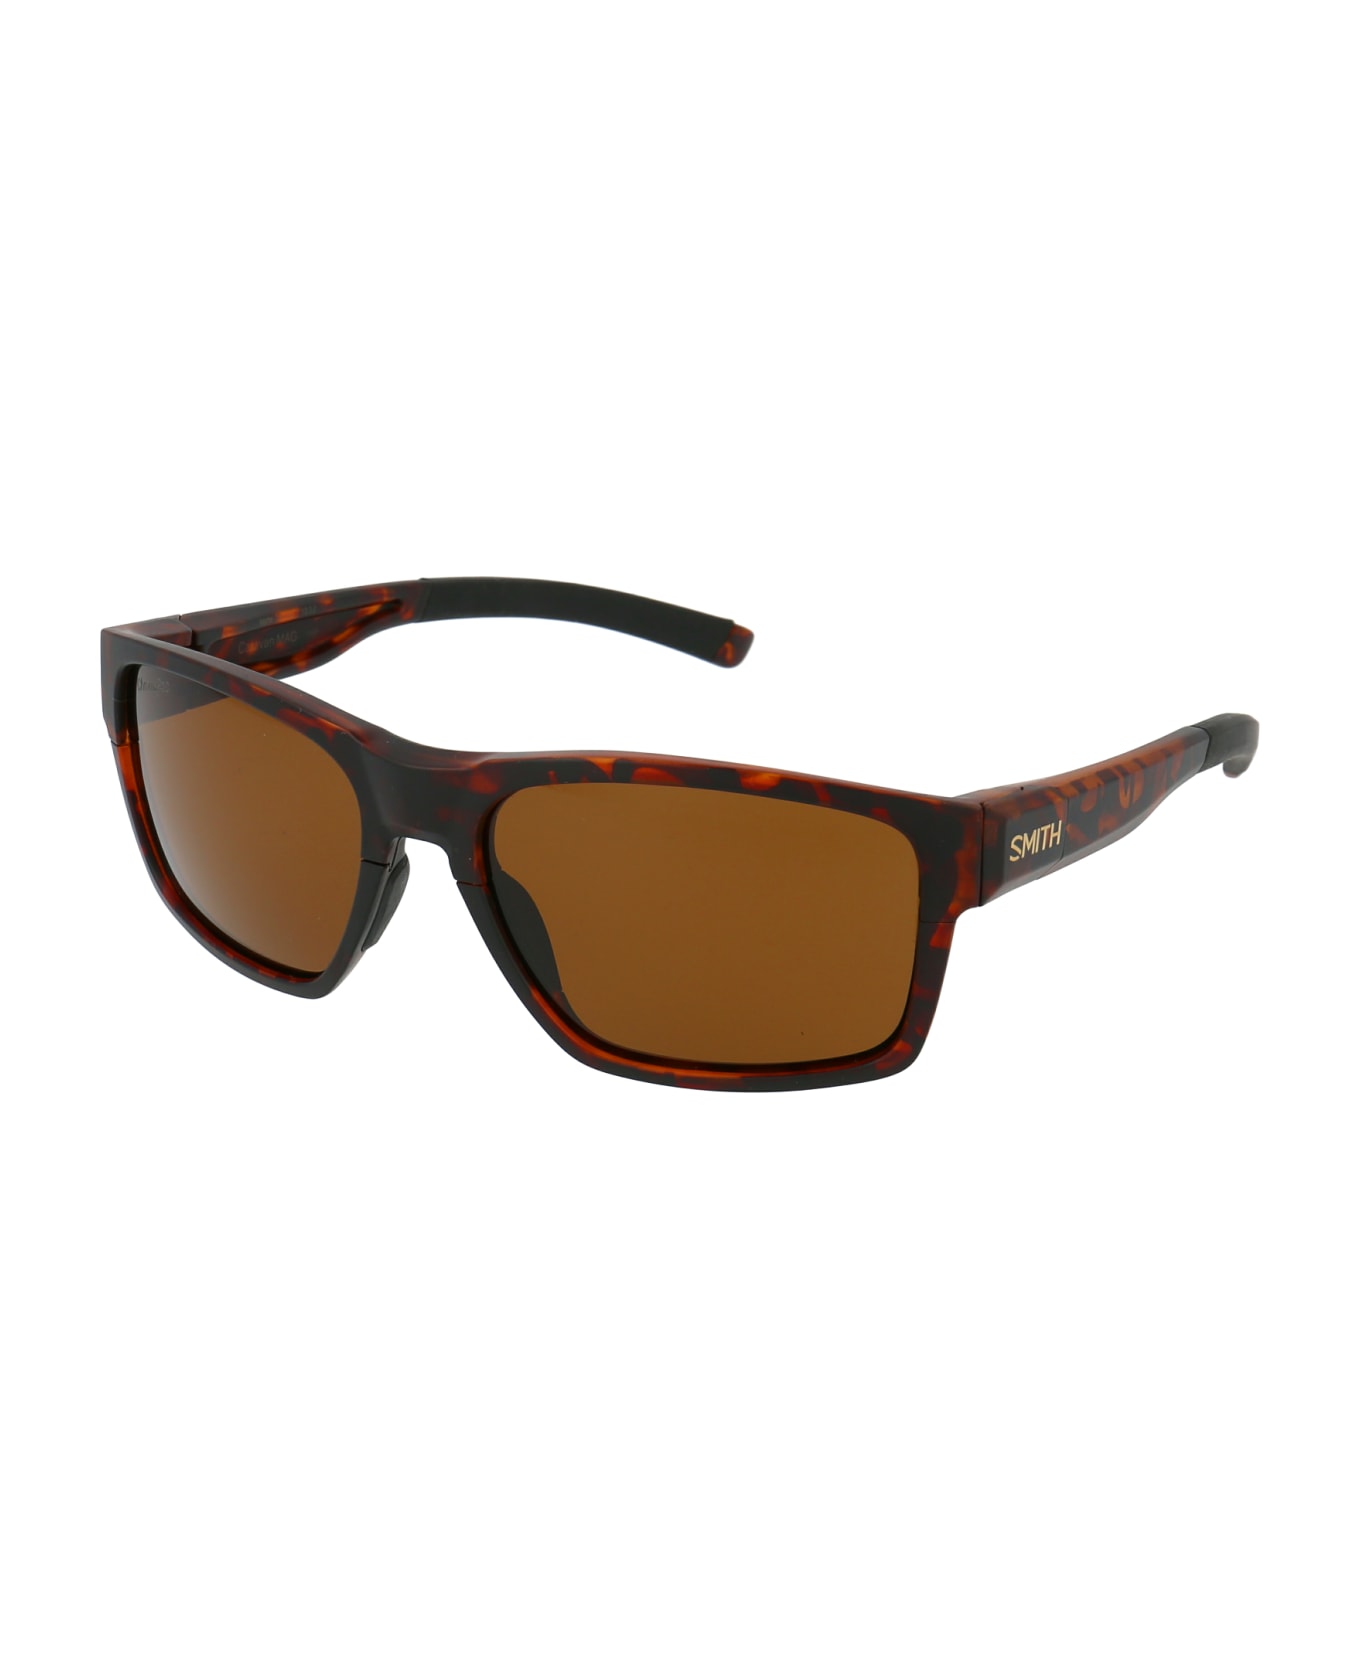 Smith Caravan Mag Sunglasses - N9PL5 MATT HAVANAA